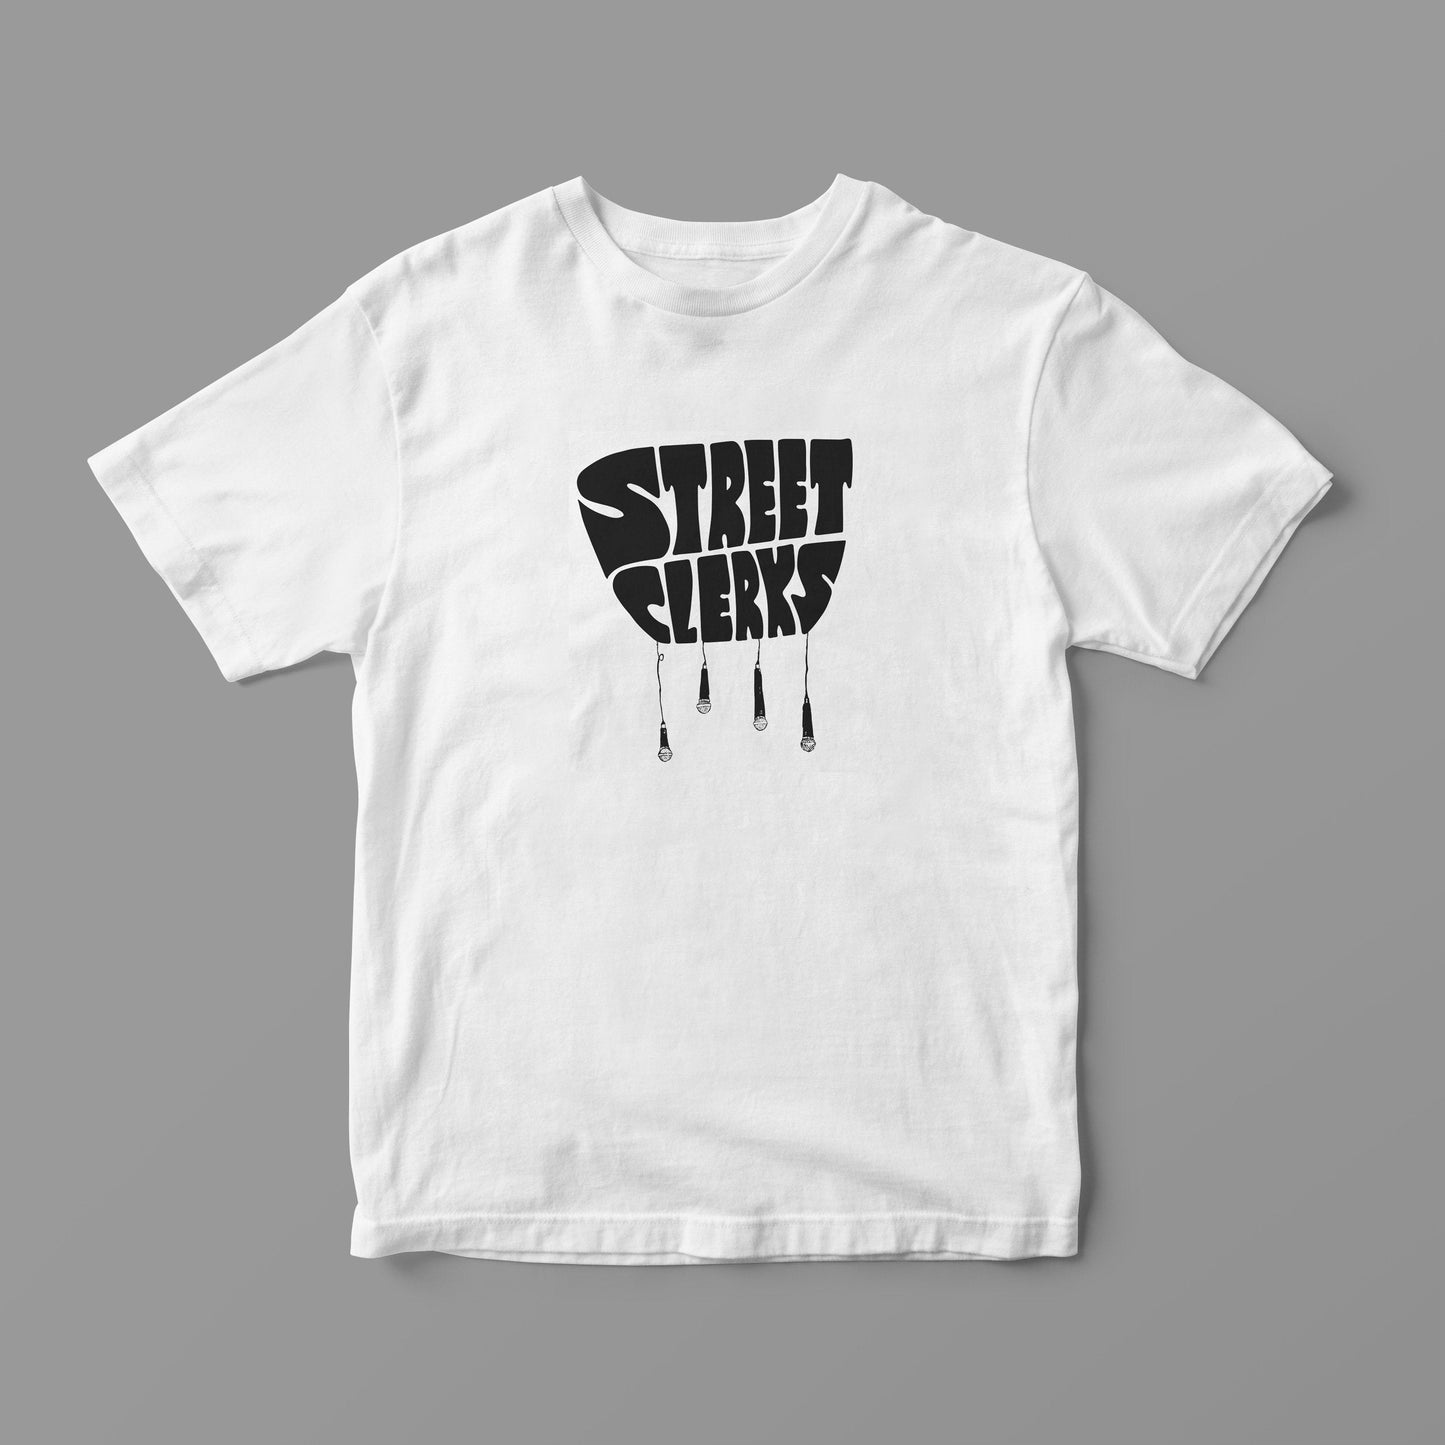 T-shirt STREET CLERKS #2